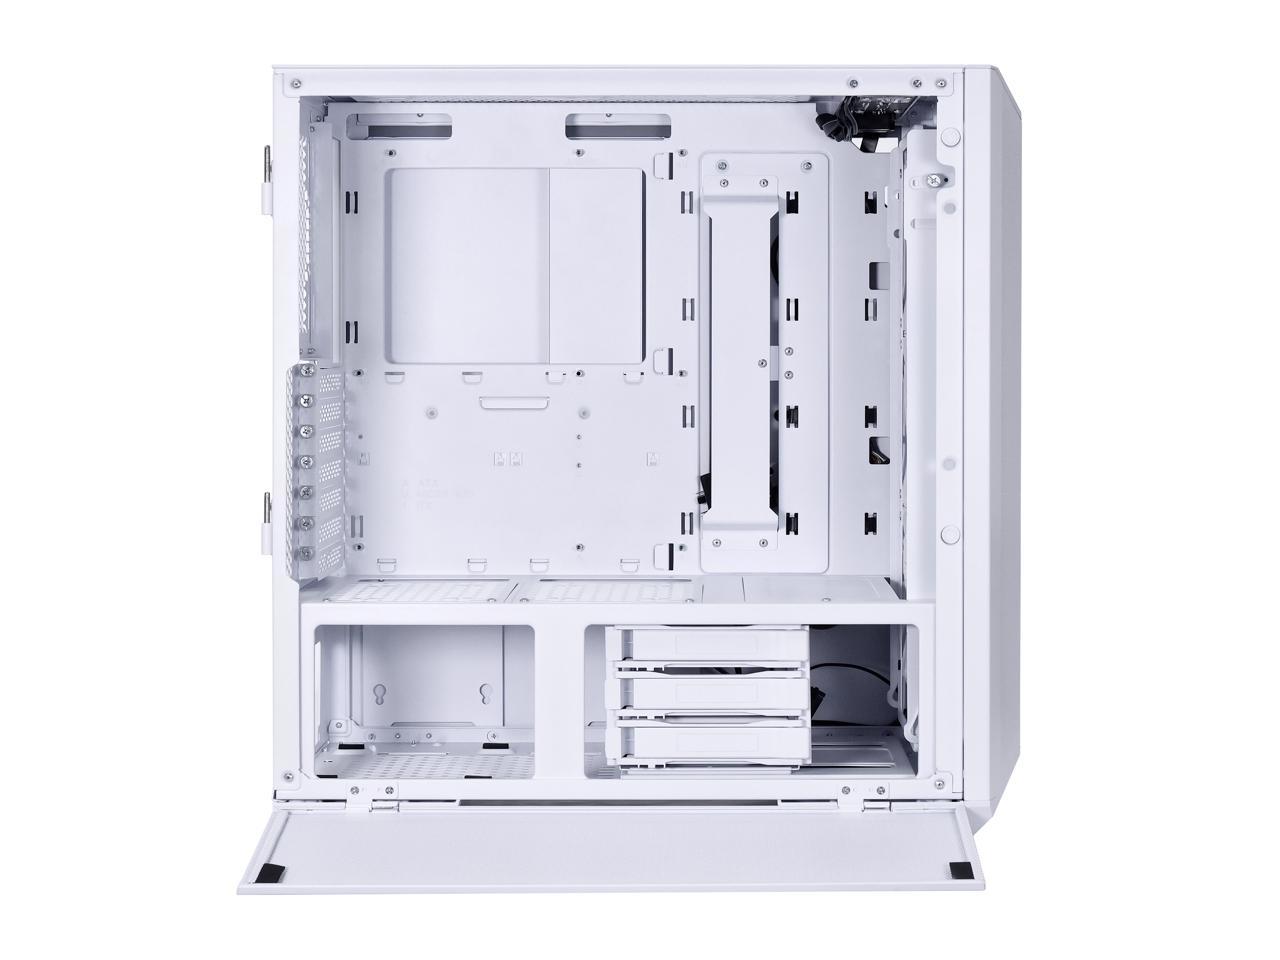 LIAN LI LANCOOL II MESH C RGB SNOW WHITE Tempered Glass ATX Case - White Color, Type C Included - LANCOOL II MESH C RGB-S